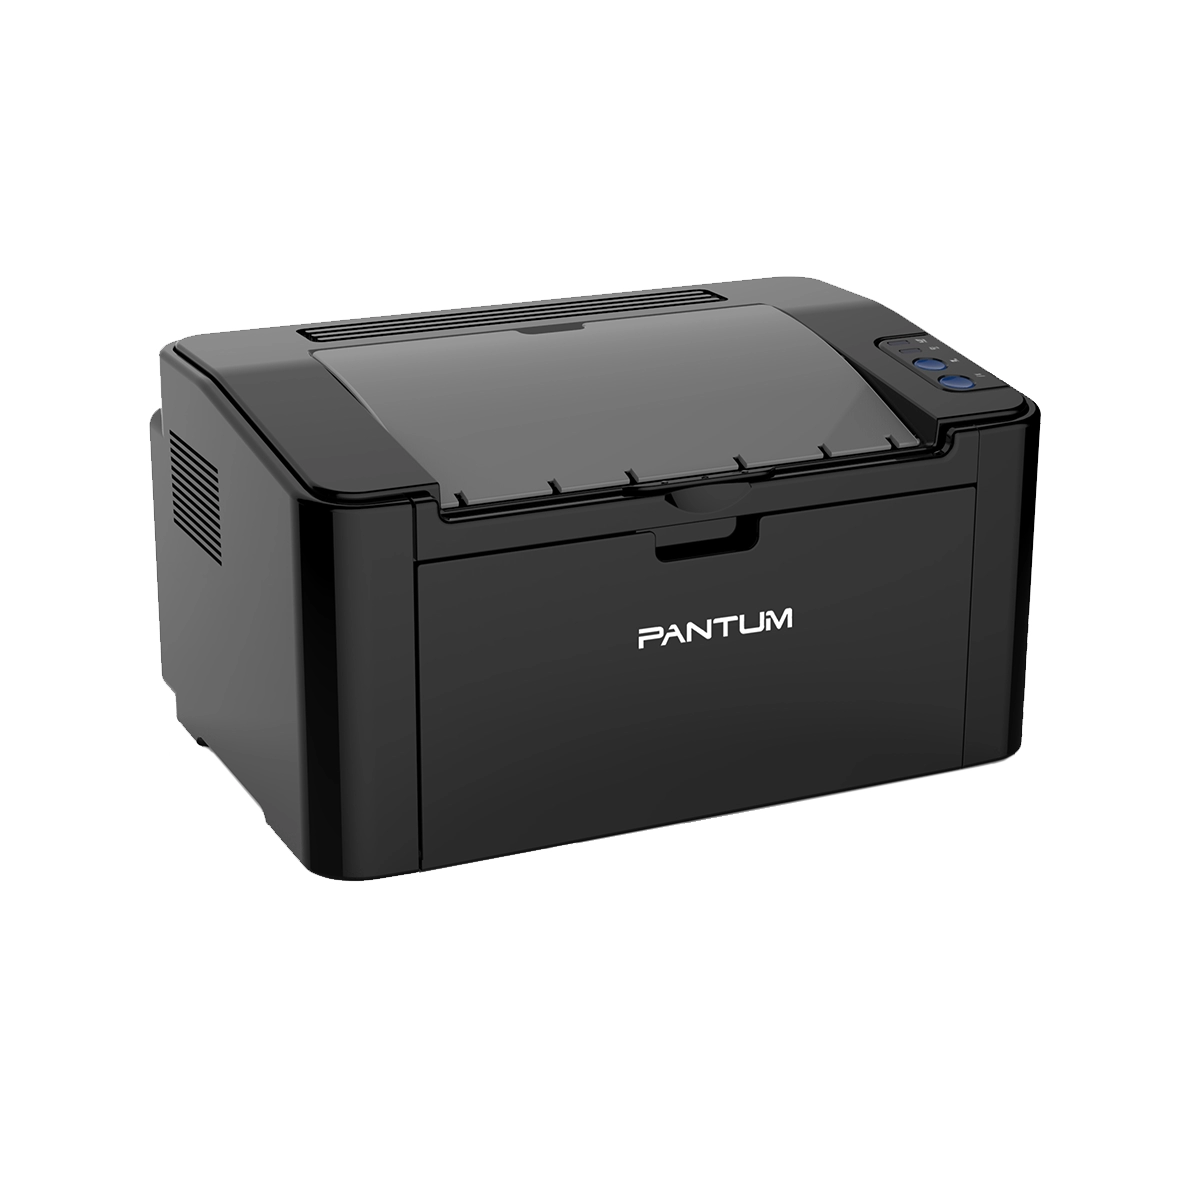 Pantum P2500W Wireless Laser Printer